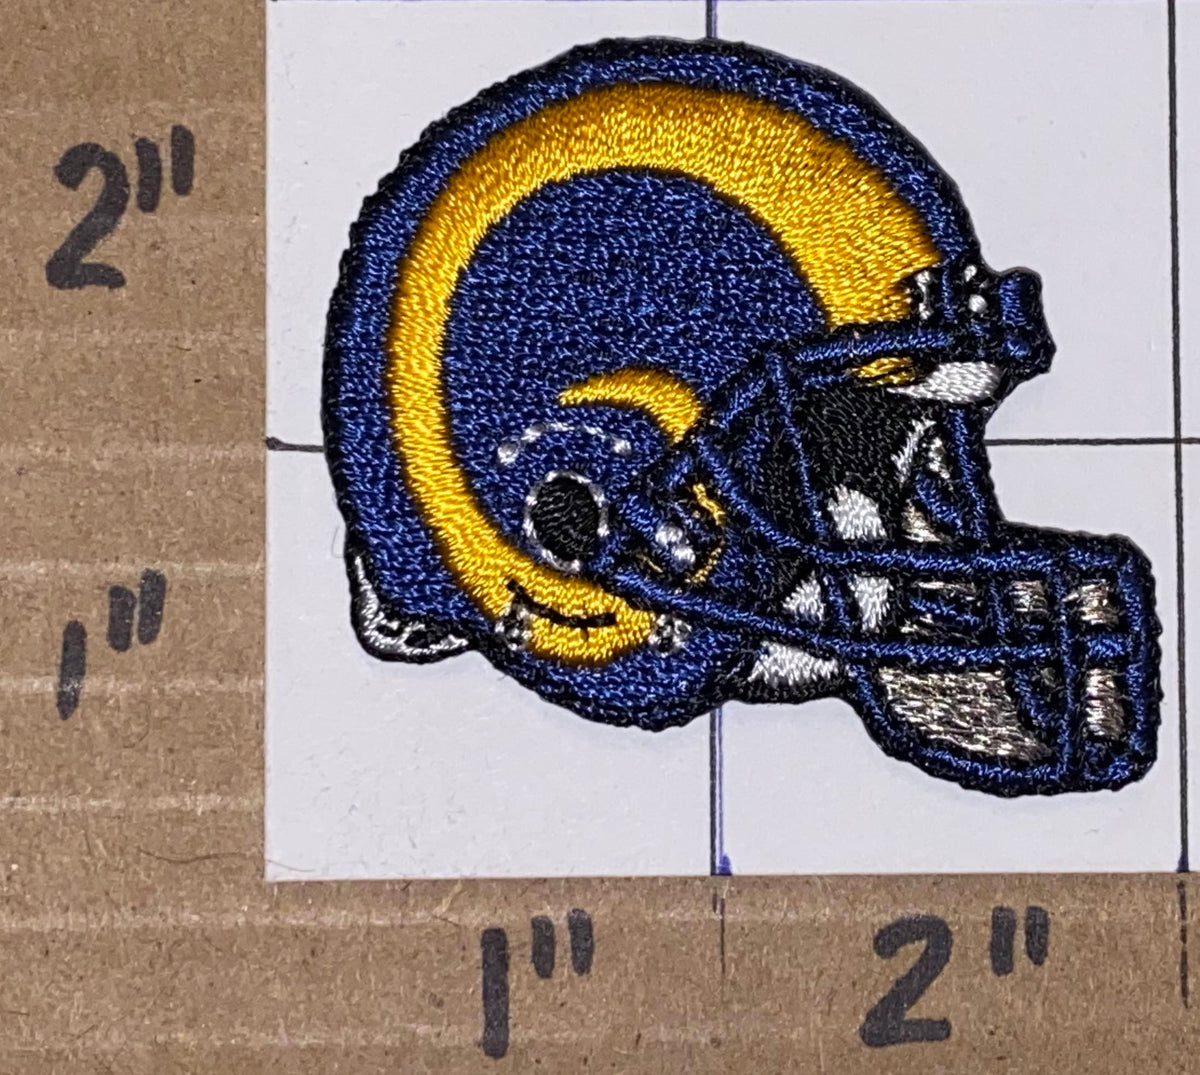 St. Louis Rams NFL Trailer Hitch Receiver Cover - Helmet